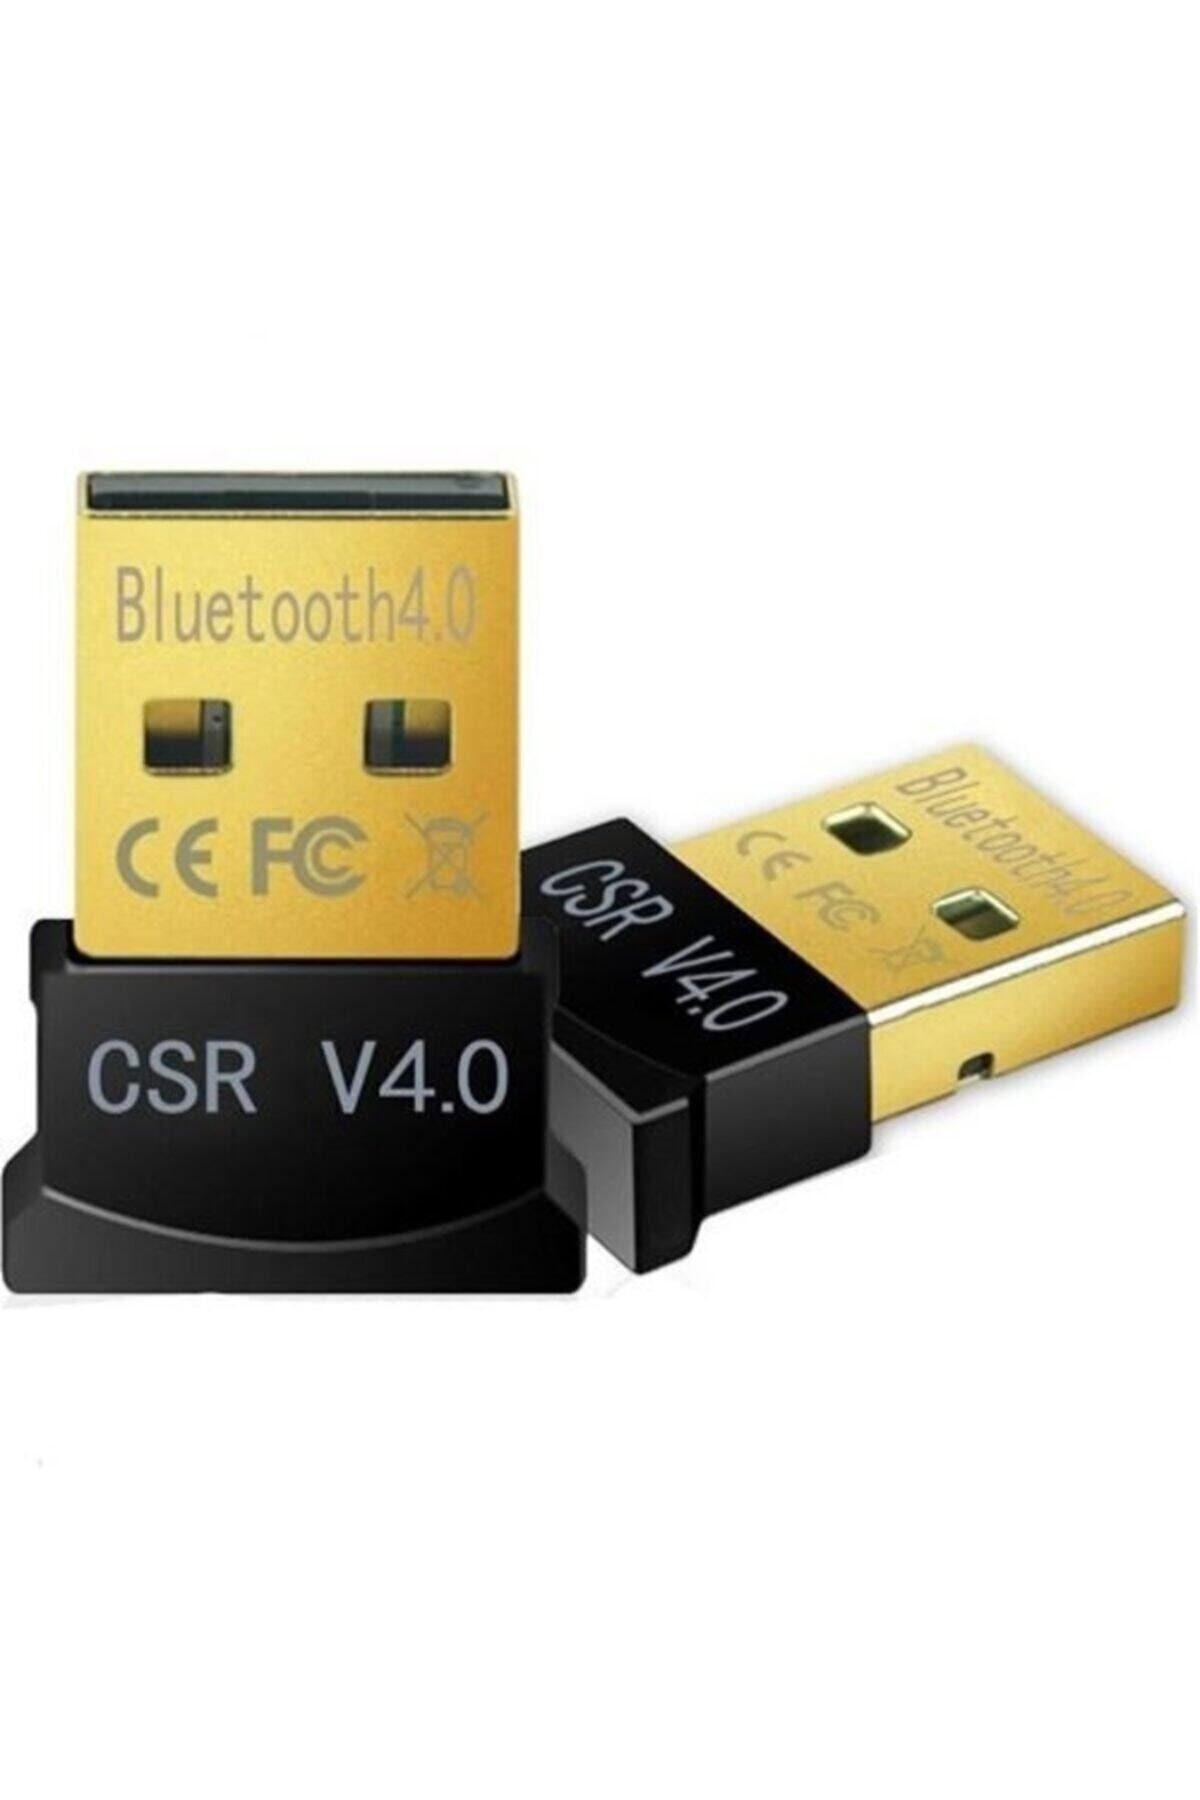 Brs Usb Bluetooth Dongle V4.0 Mini V4.0 Bluetooth Adaptör Tak Çalıştır Dual Mode